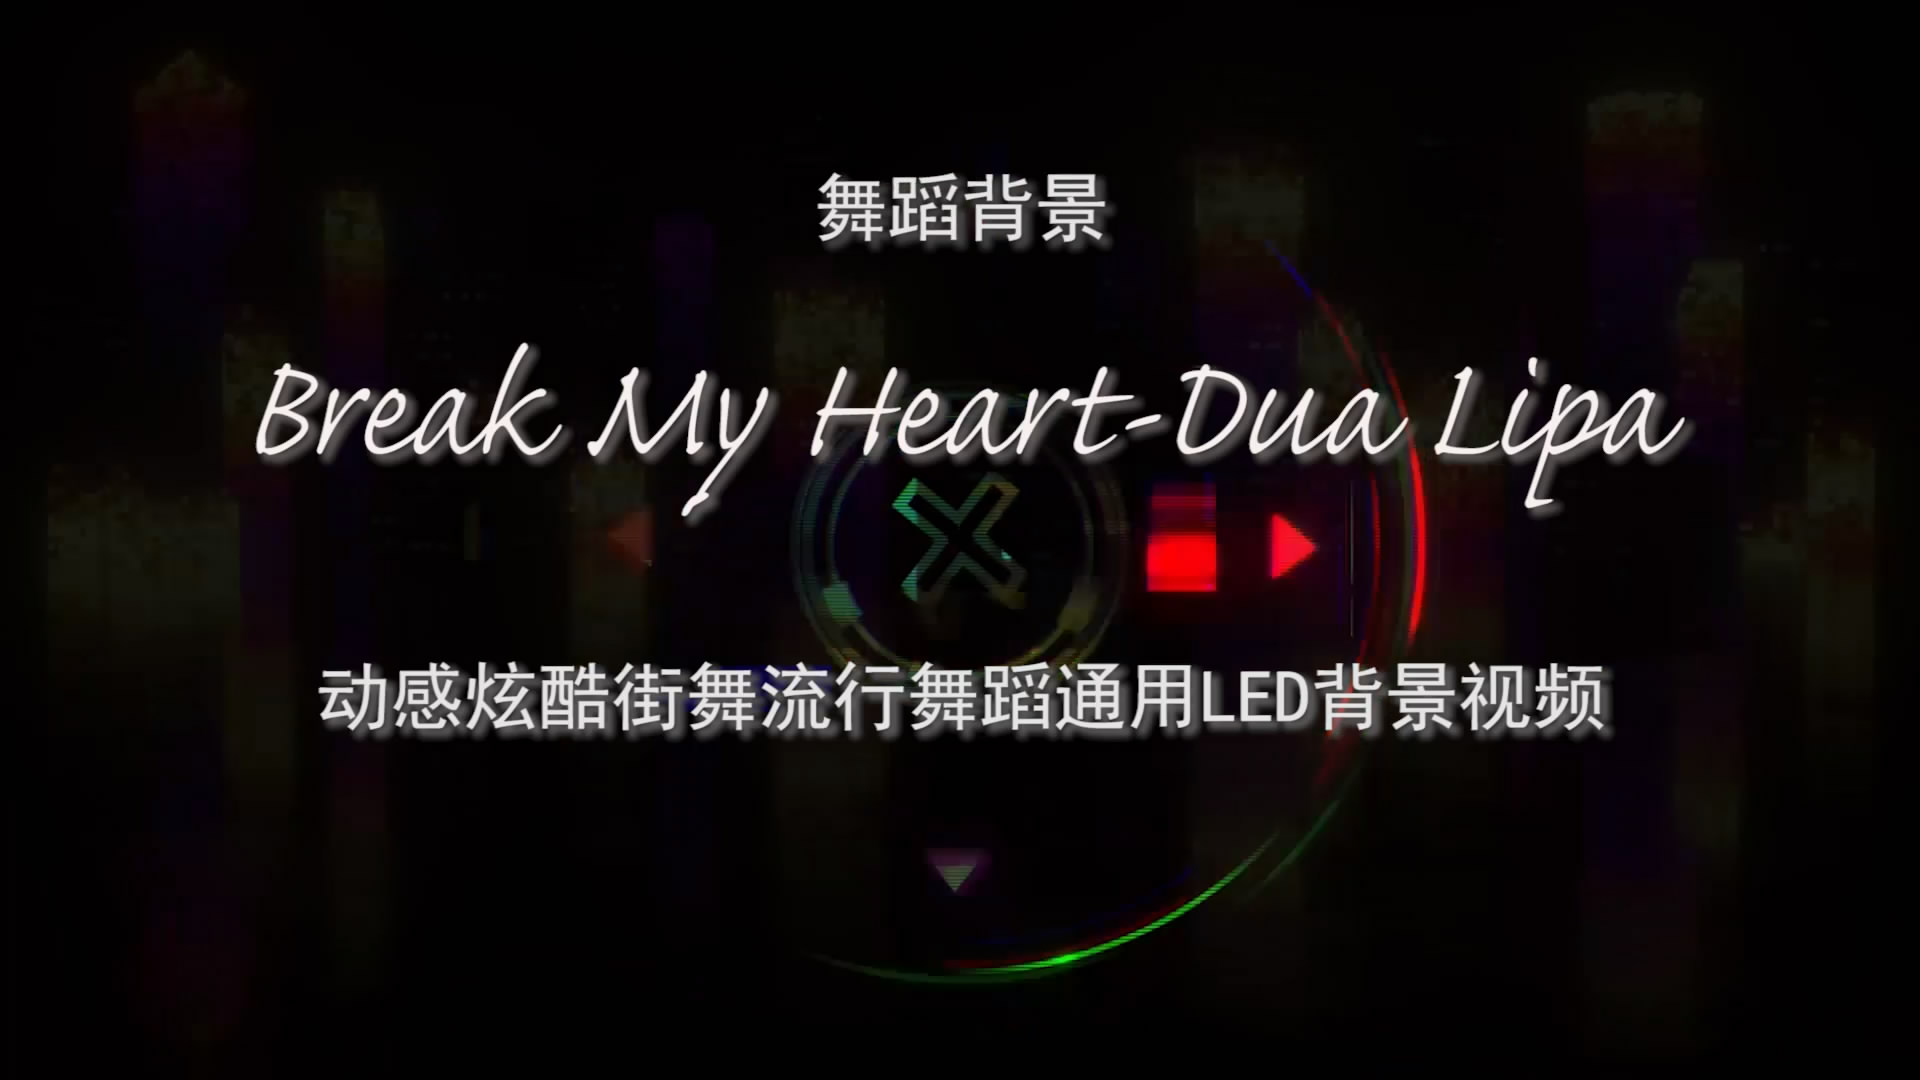 Break My Heart-Dua Lipa 我的心都碎了 动感炫酷街舞流行歌舞LED背景大屏幕视频素材TV